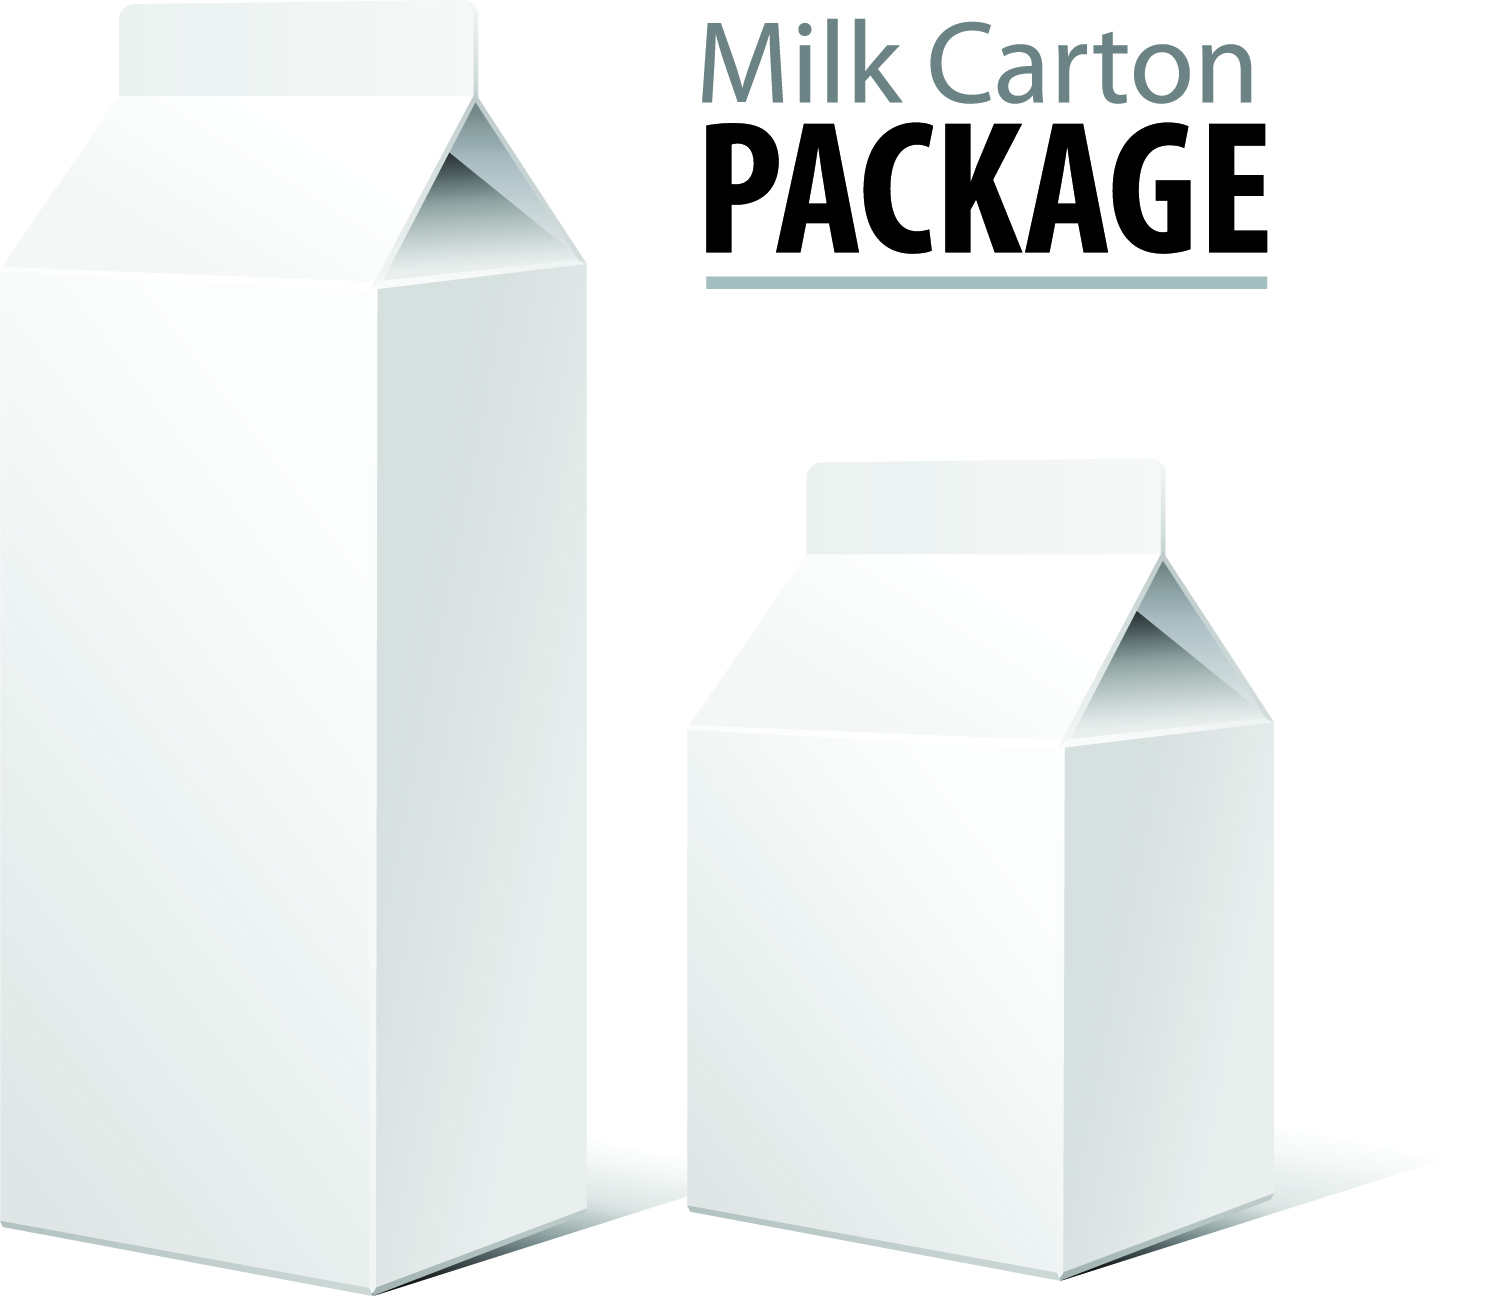 Milk cartons vector Free Vector / 4Vector